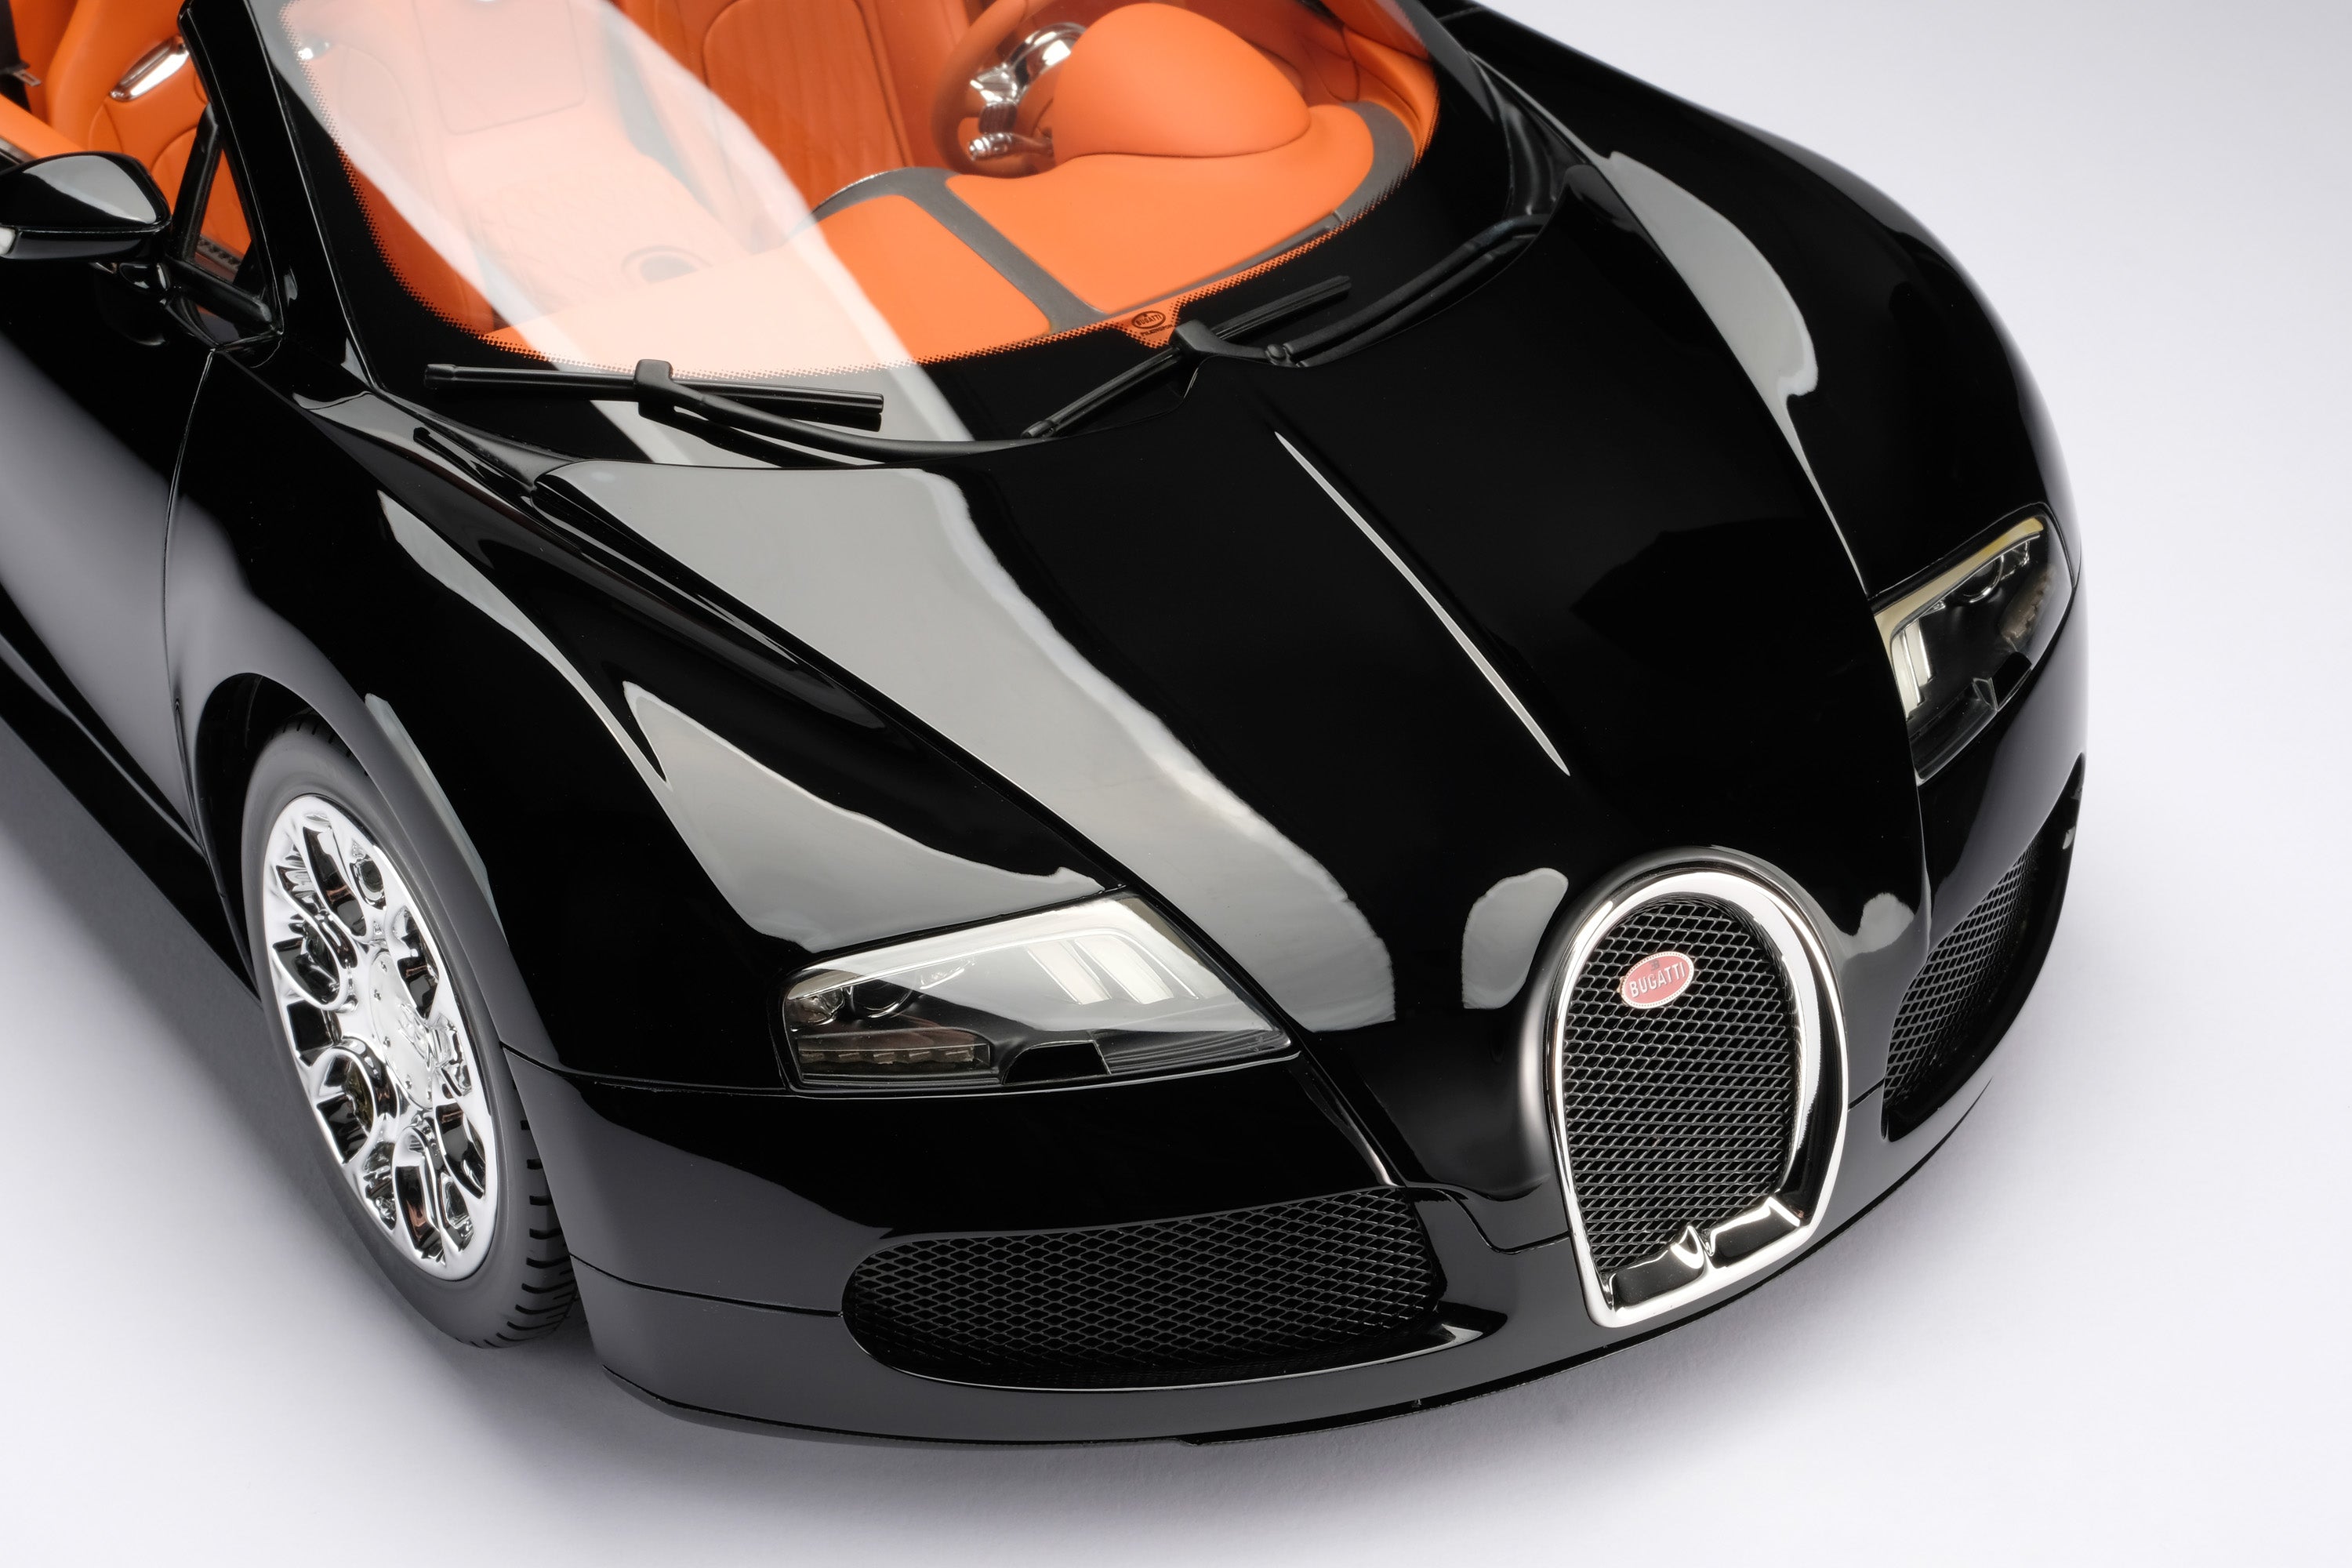 Bugatti Veyron Grand Sport (2009) – Amalgam Collection